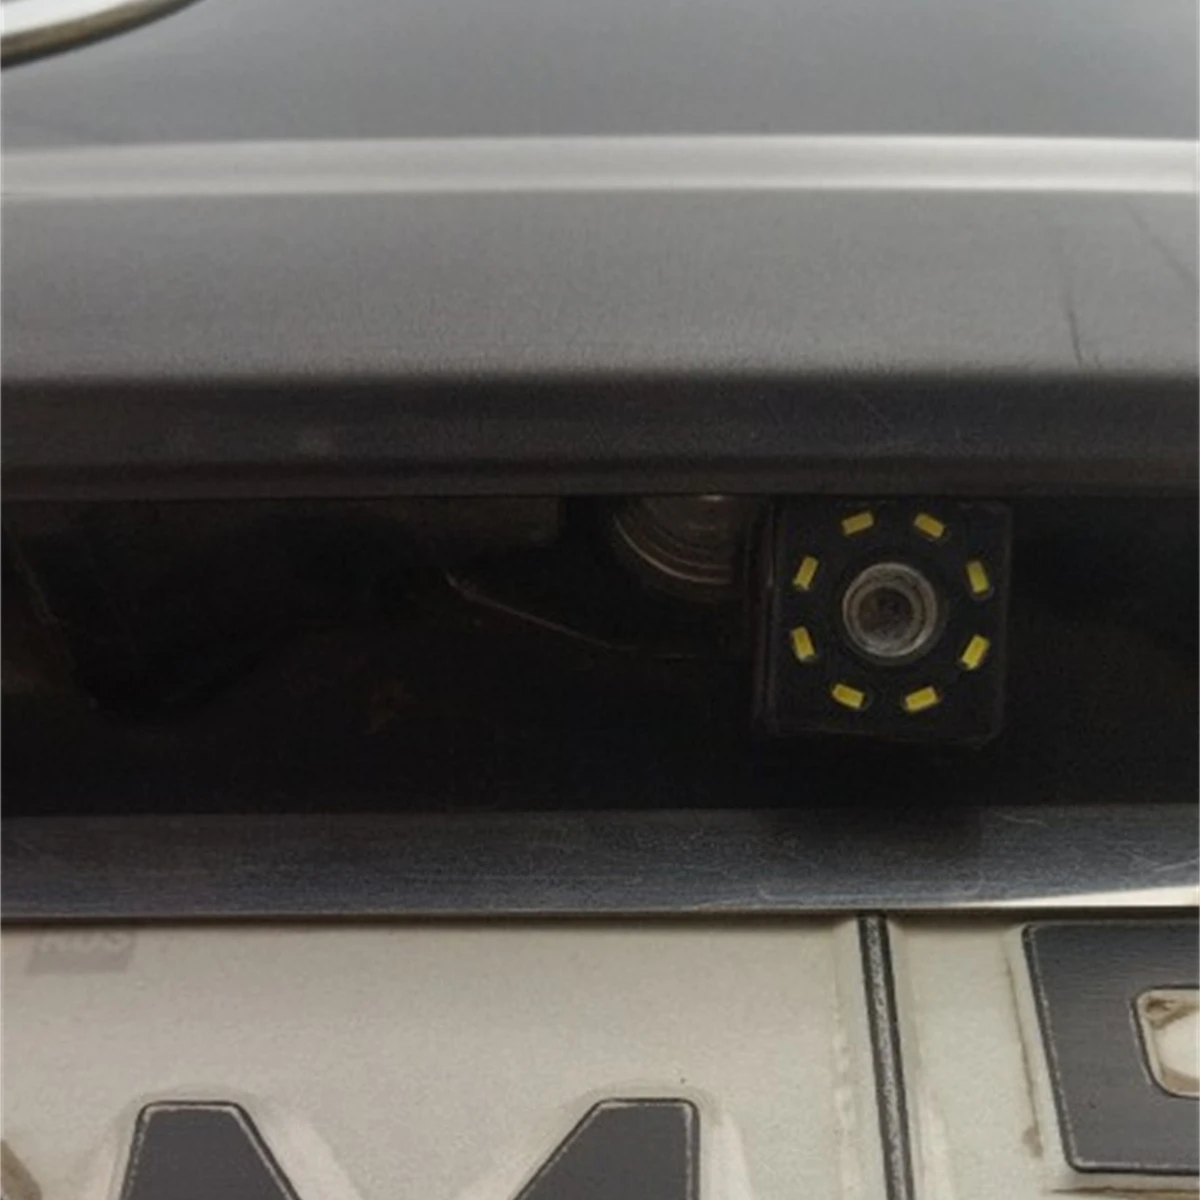 Скоба за камерата за обратно виждане с осветление автомобилен регистрационен номер за Toyota Corolla Altis E140 E150 2007-2013